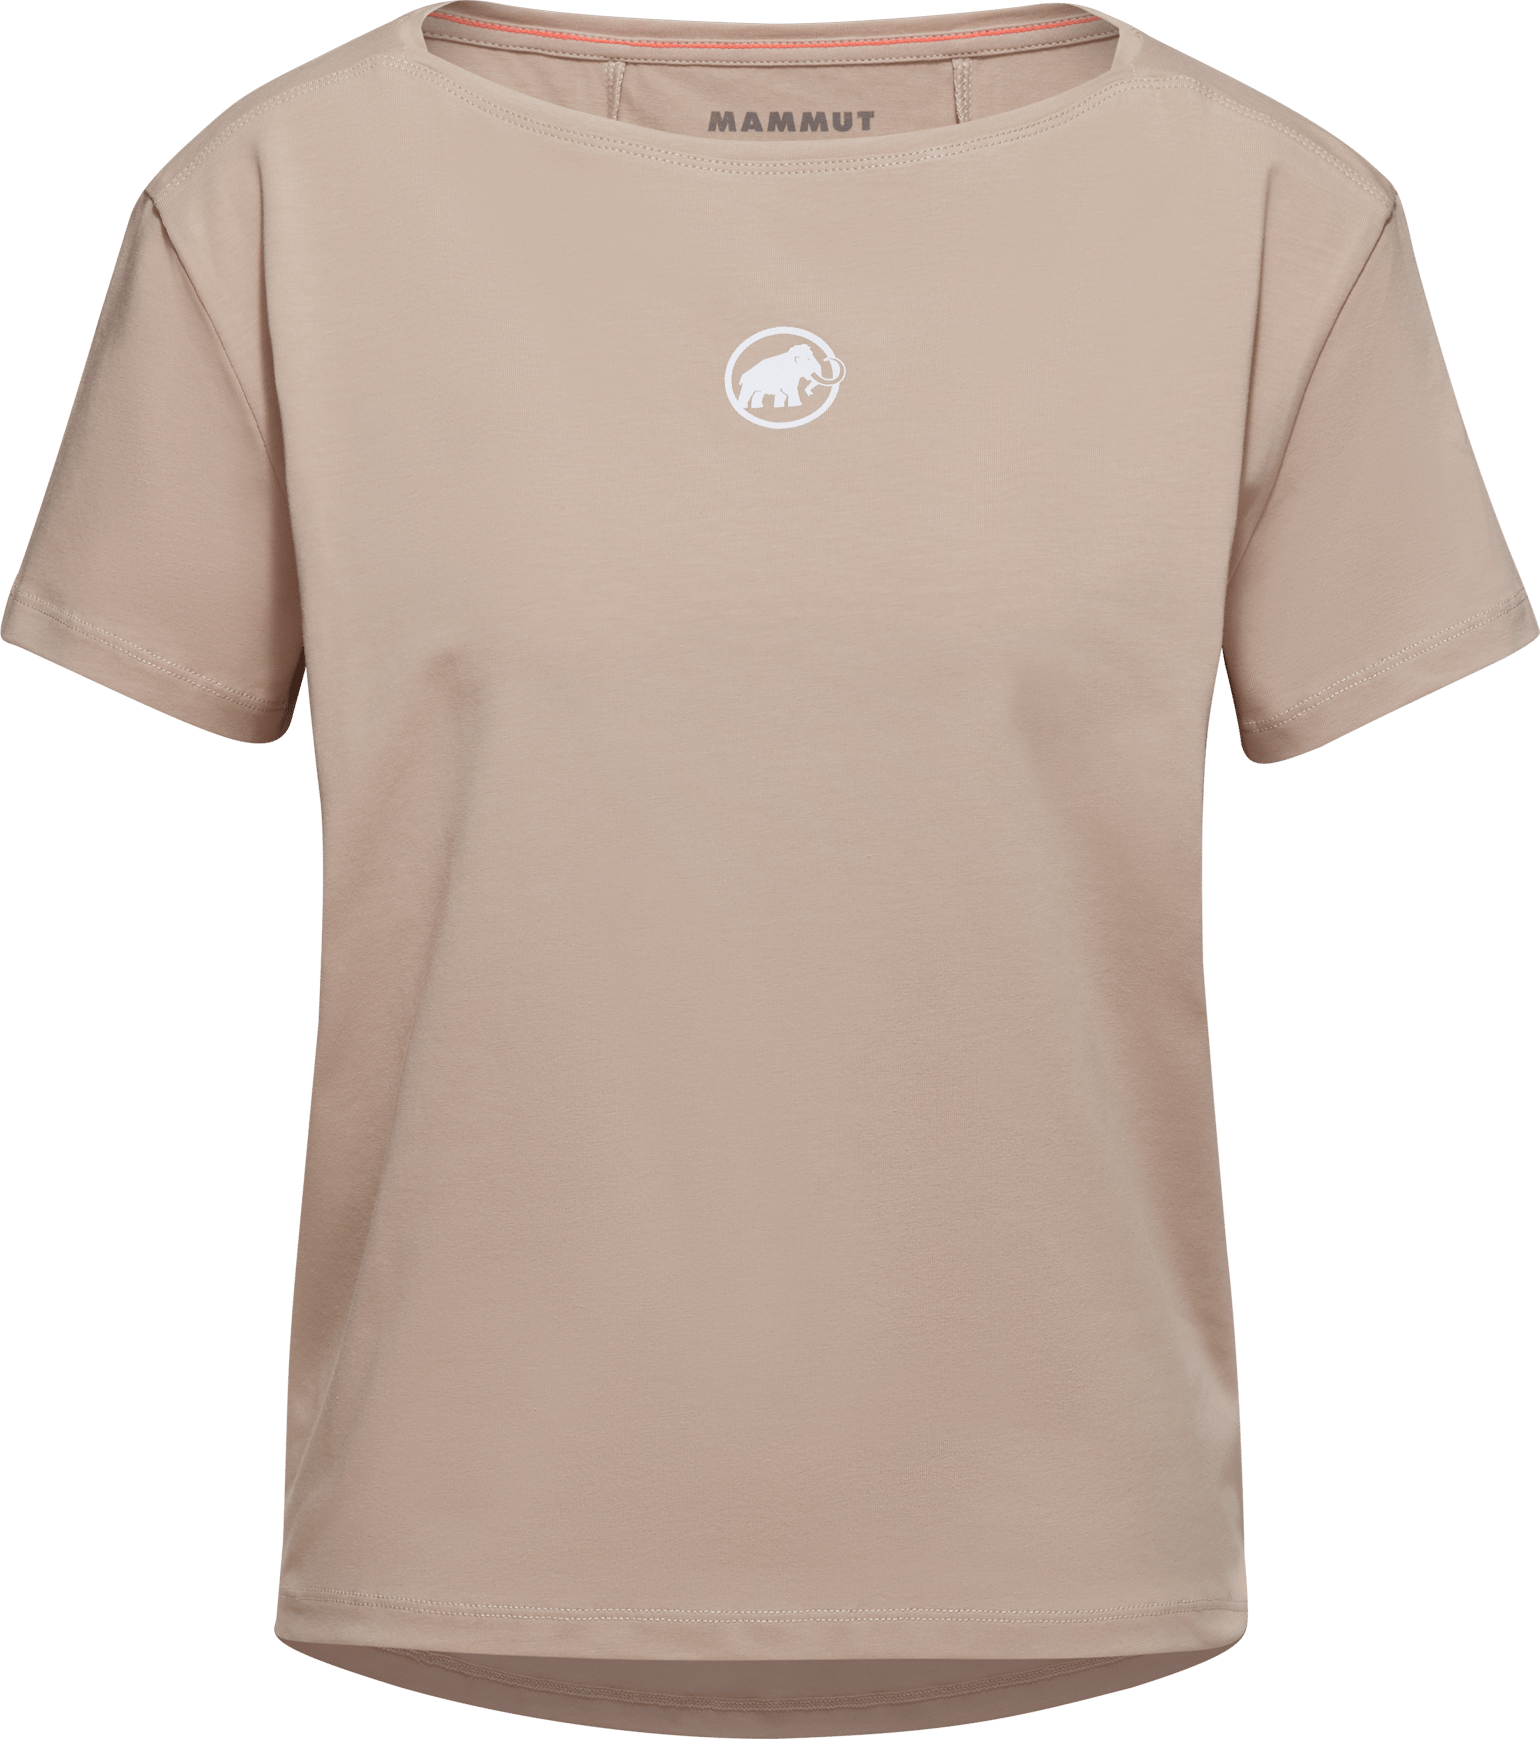 Mammut Women's Seon T-Shirt Original savannah